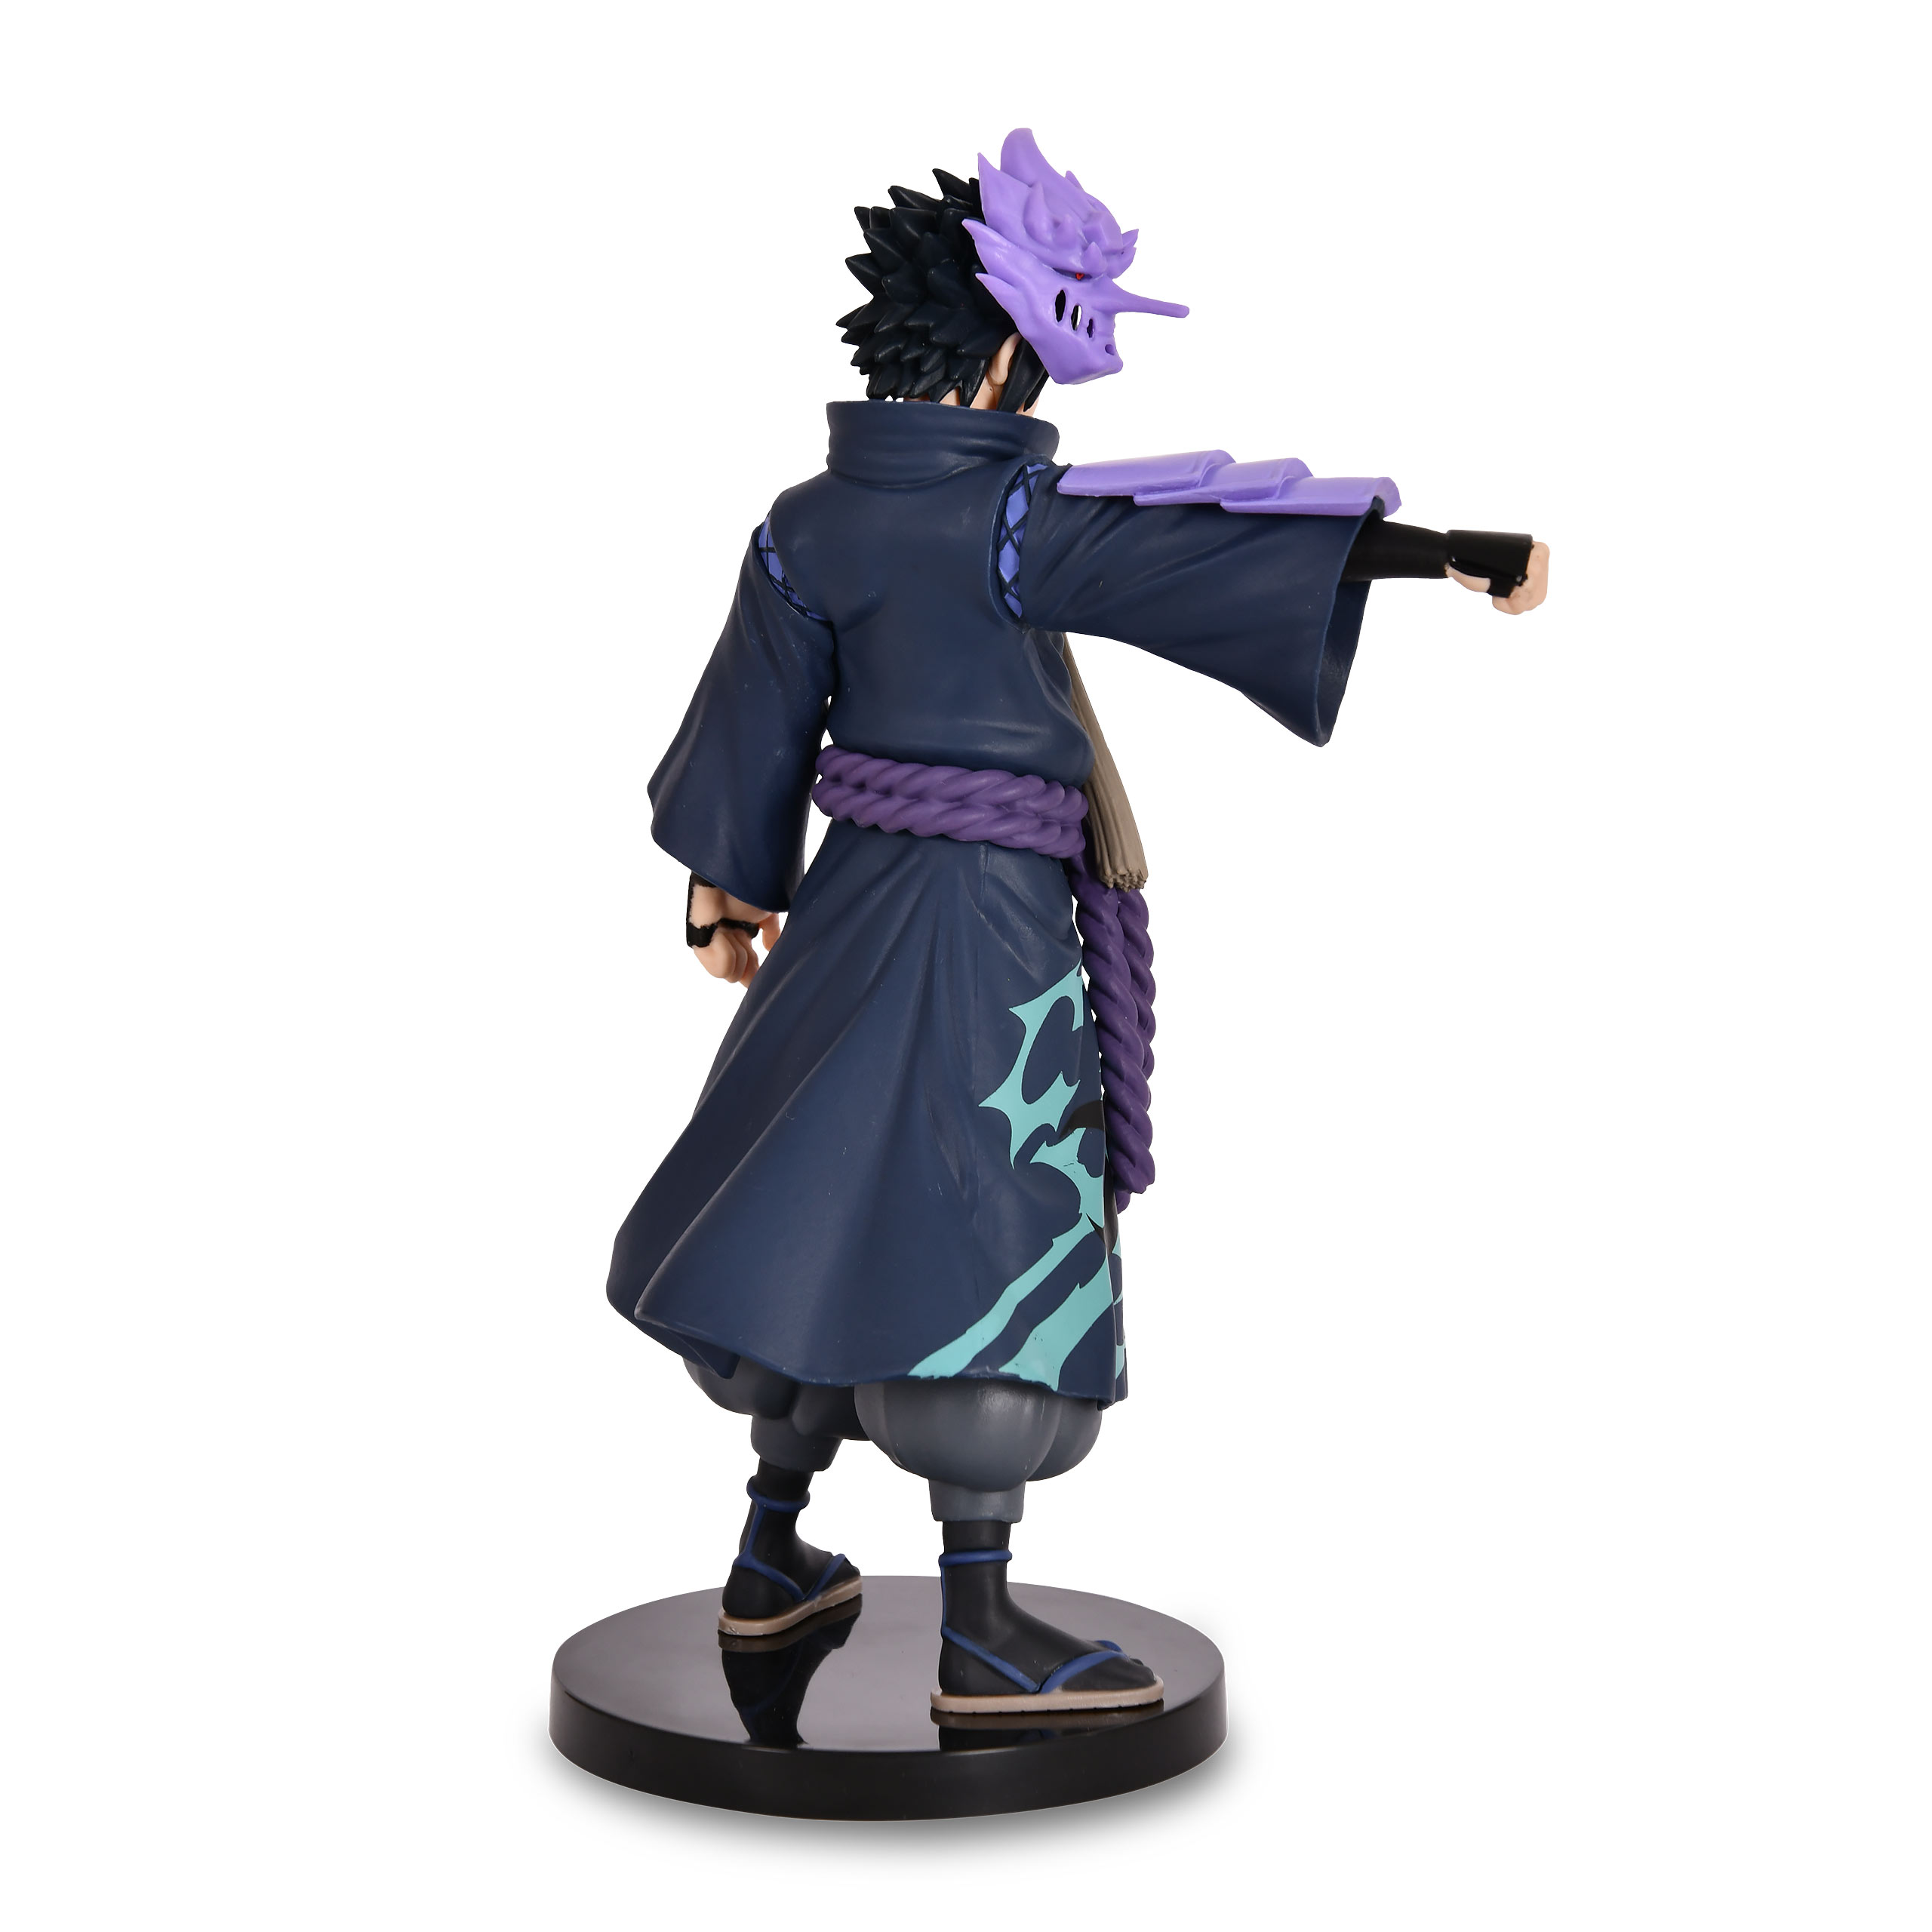 Naruto Shippuden - Uchiha Sasuke 20th Anniversary Figure